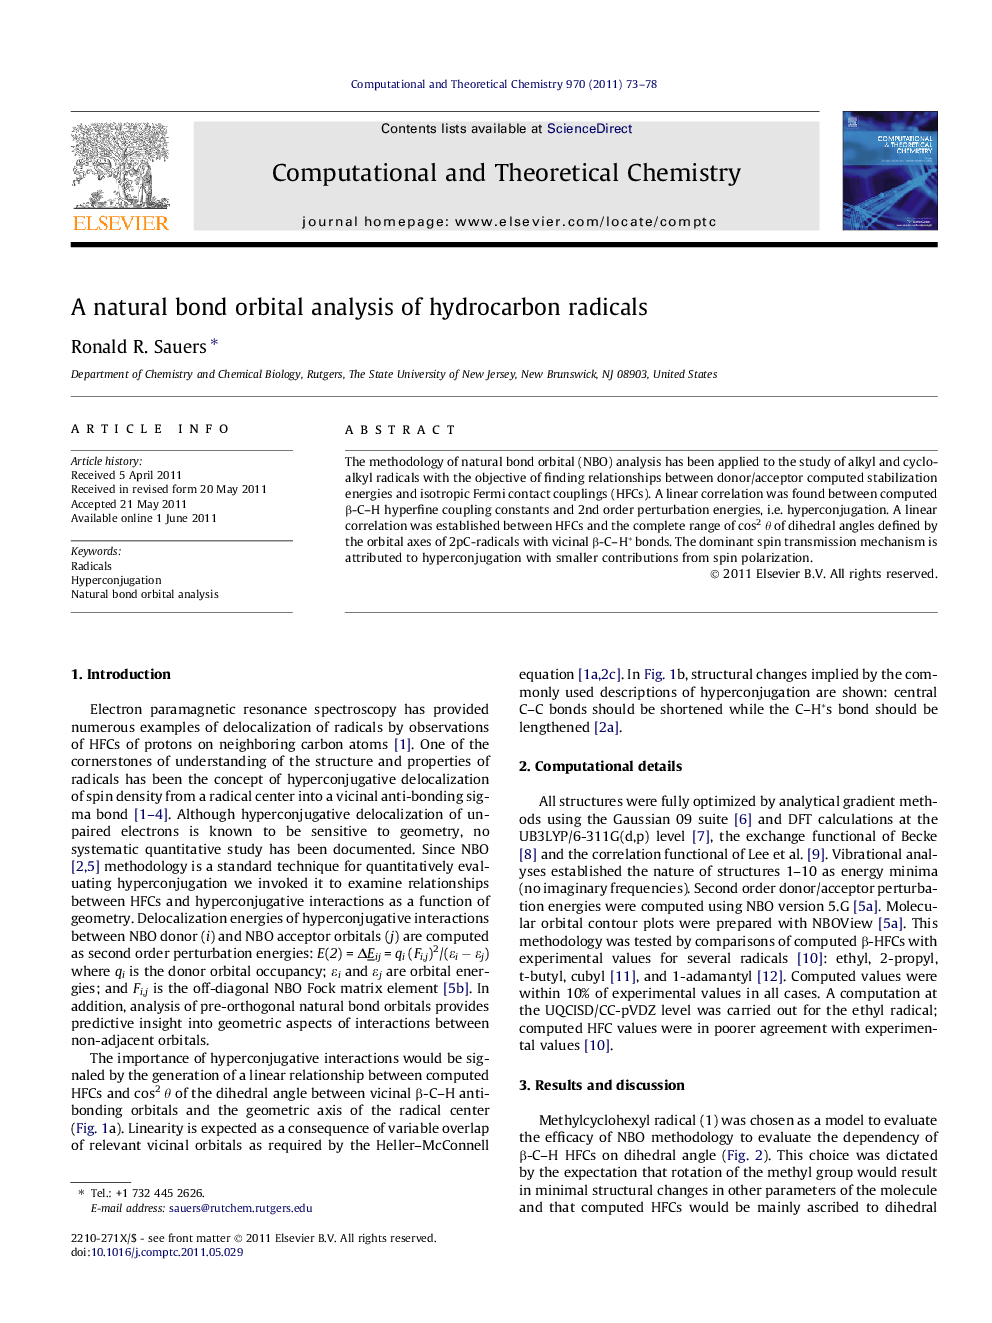 A natural bond orbital analysis of hydrocarbon radicals